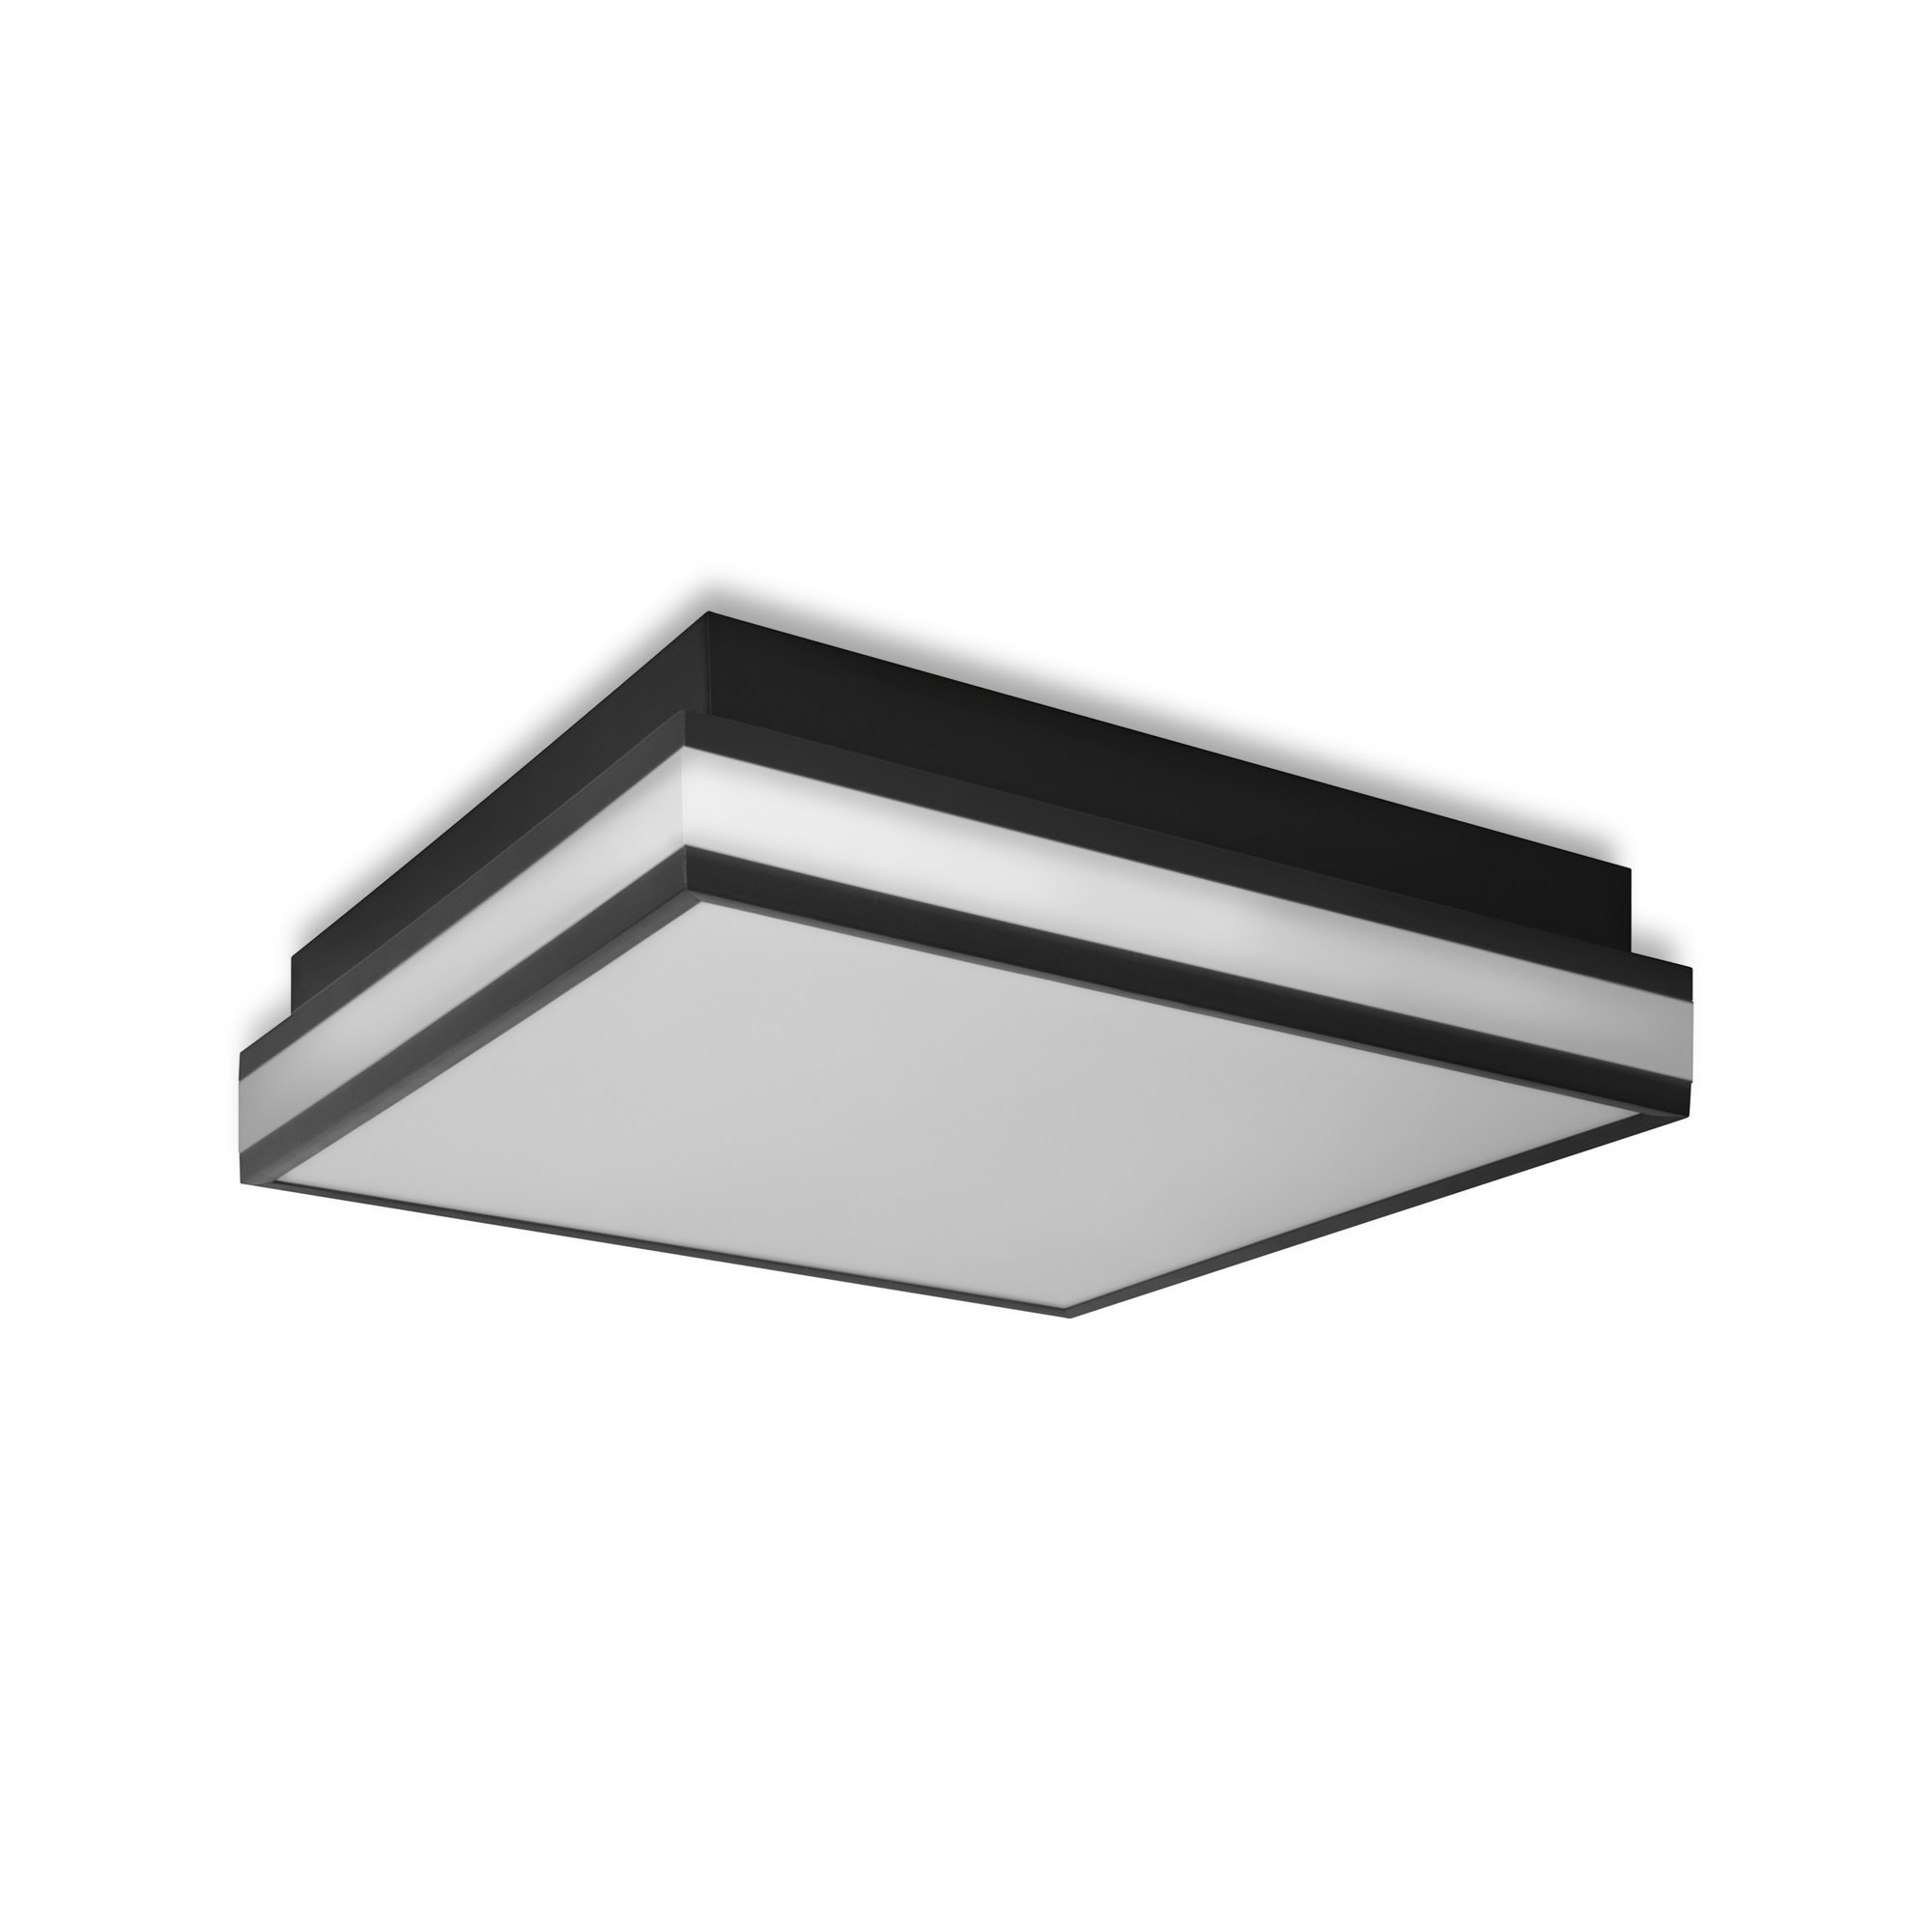 LEDVANCE SMART+ WiFi Tunable White LED Ceiling Light ORBIS MAGNET 300x300mm black 2500lm